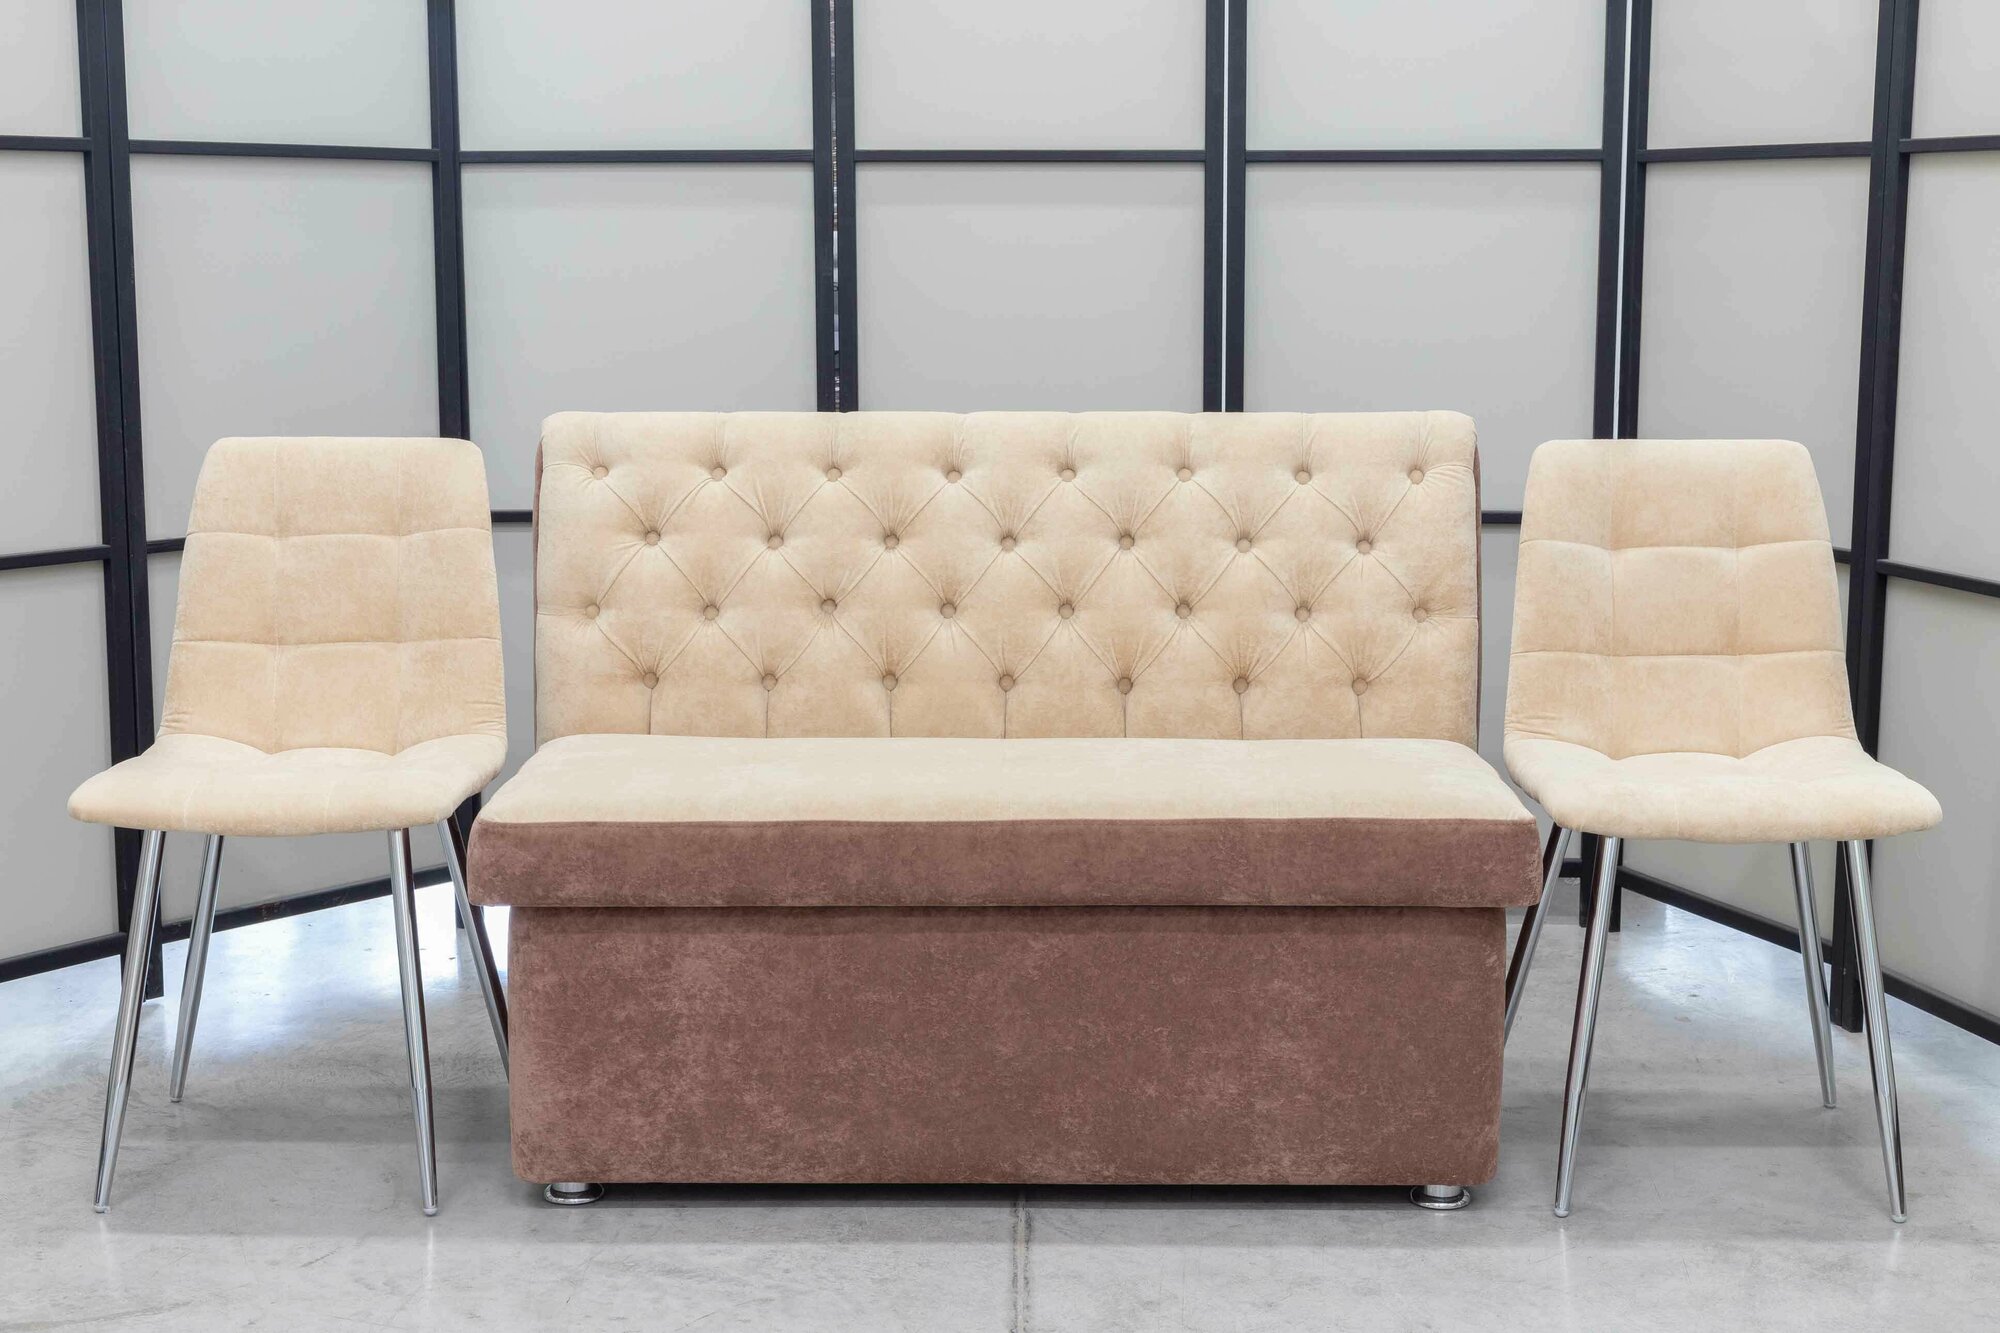 Кухонный диван Монро со стульями (2 шт.), 120х65 см, обивка моющаяся, антивандальная, антикоготь, цвет - крем.